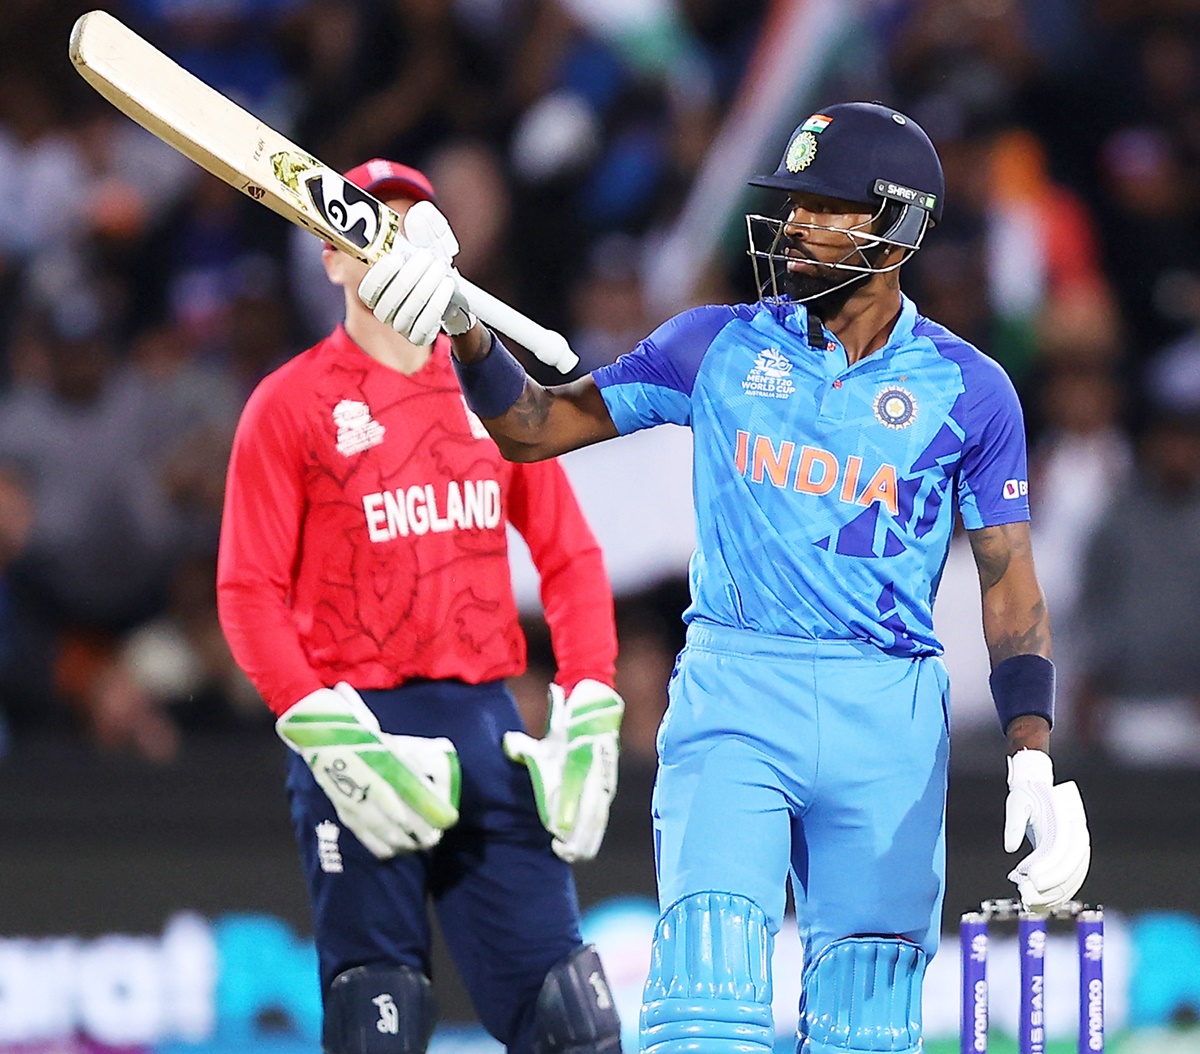 Hardik Pandya top-scored for India with 63 off 33 balls